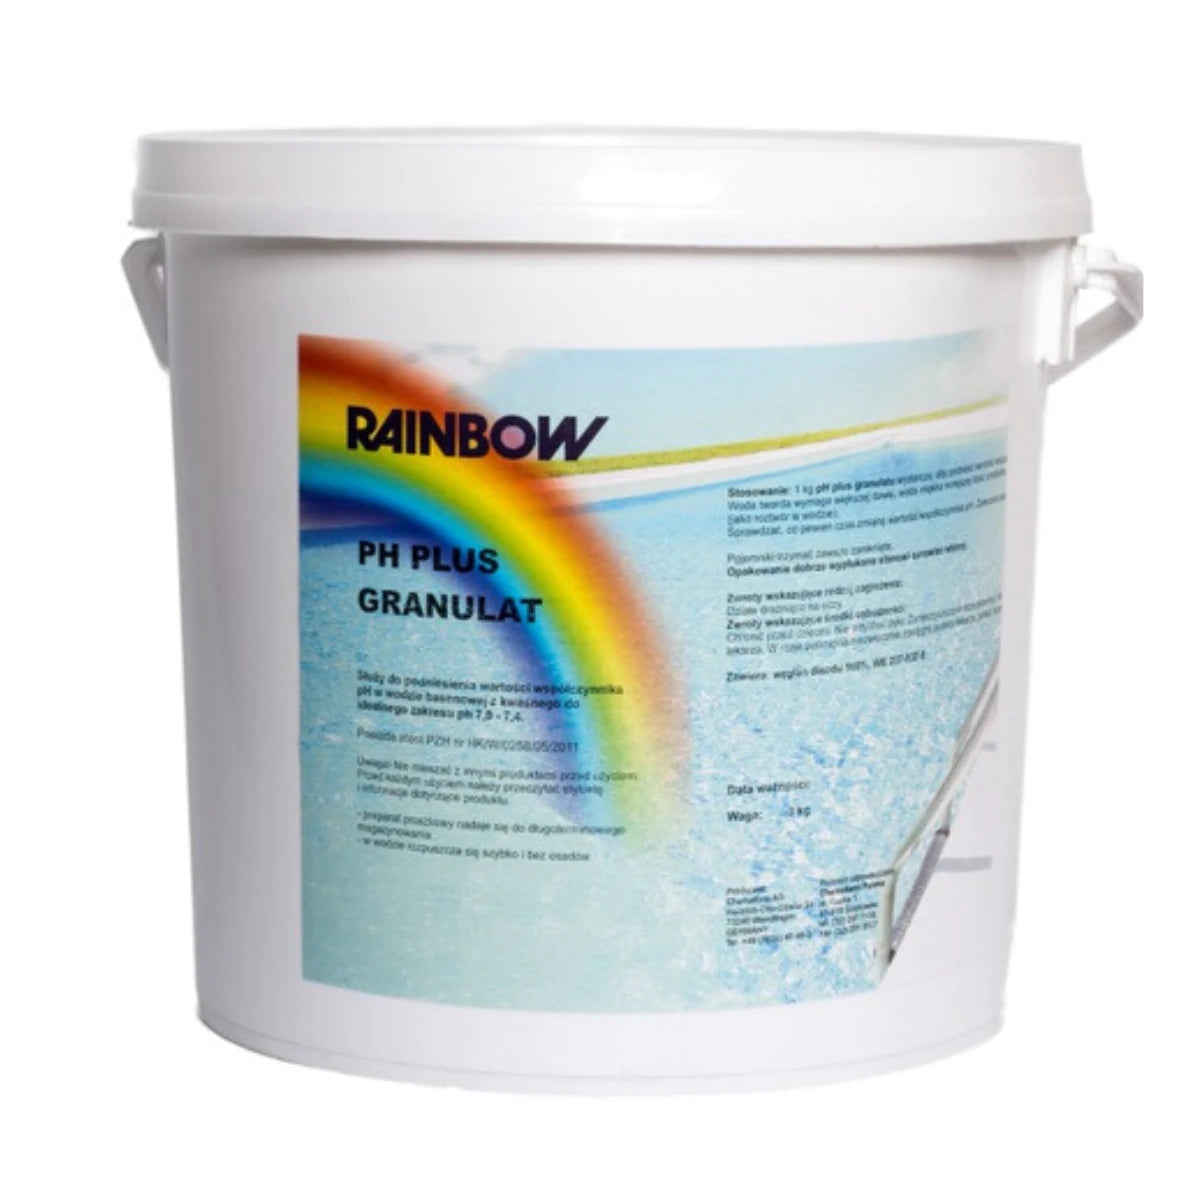 RAINBOW pH Plus granulat | 3KG